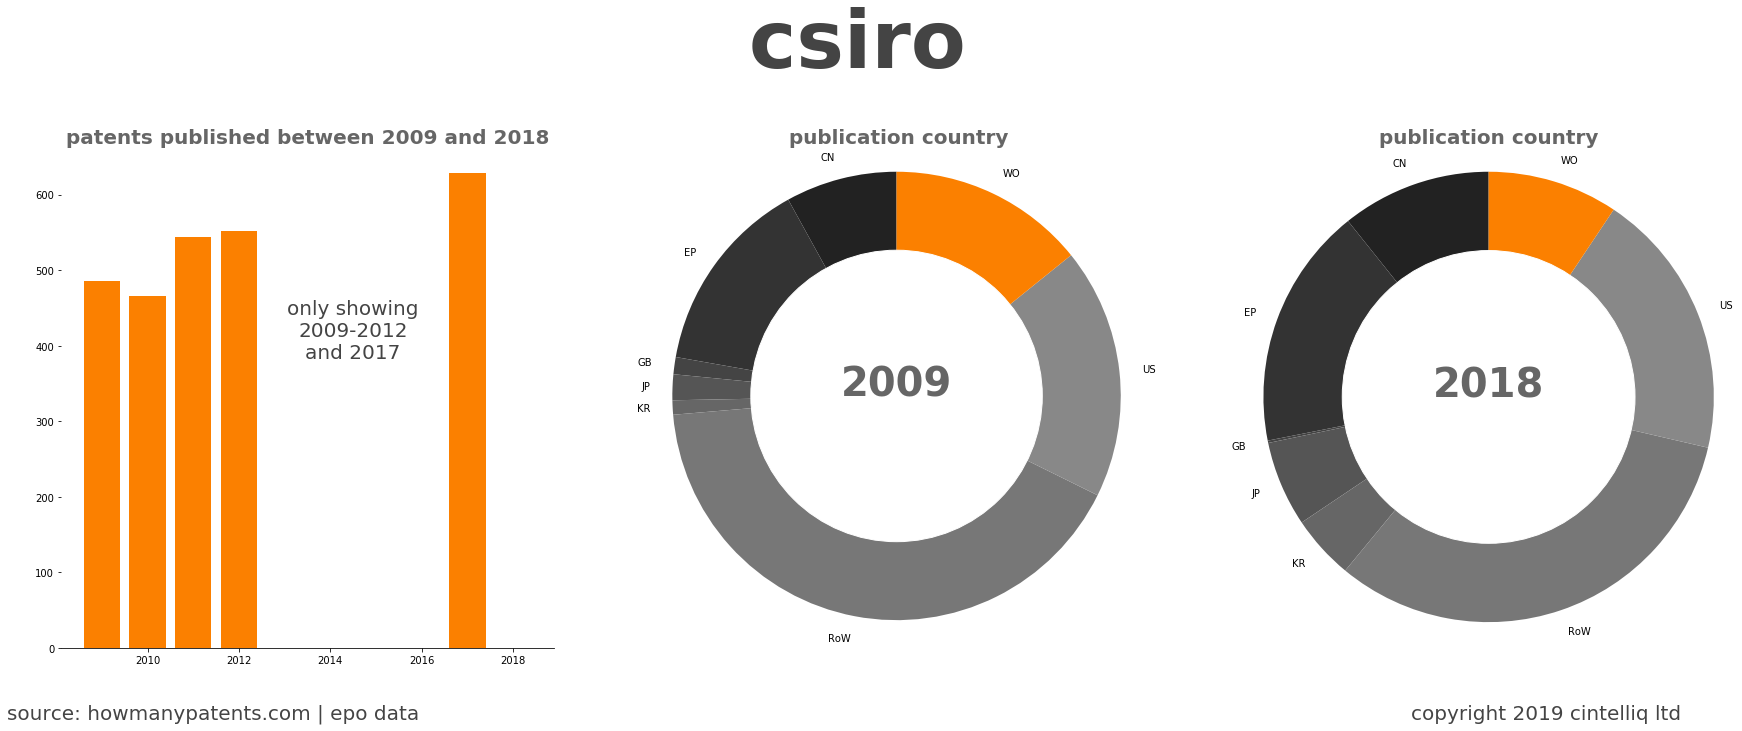 summary of patents for Csiro 